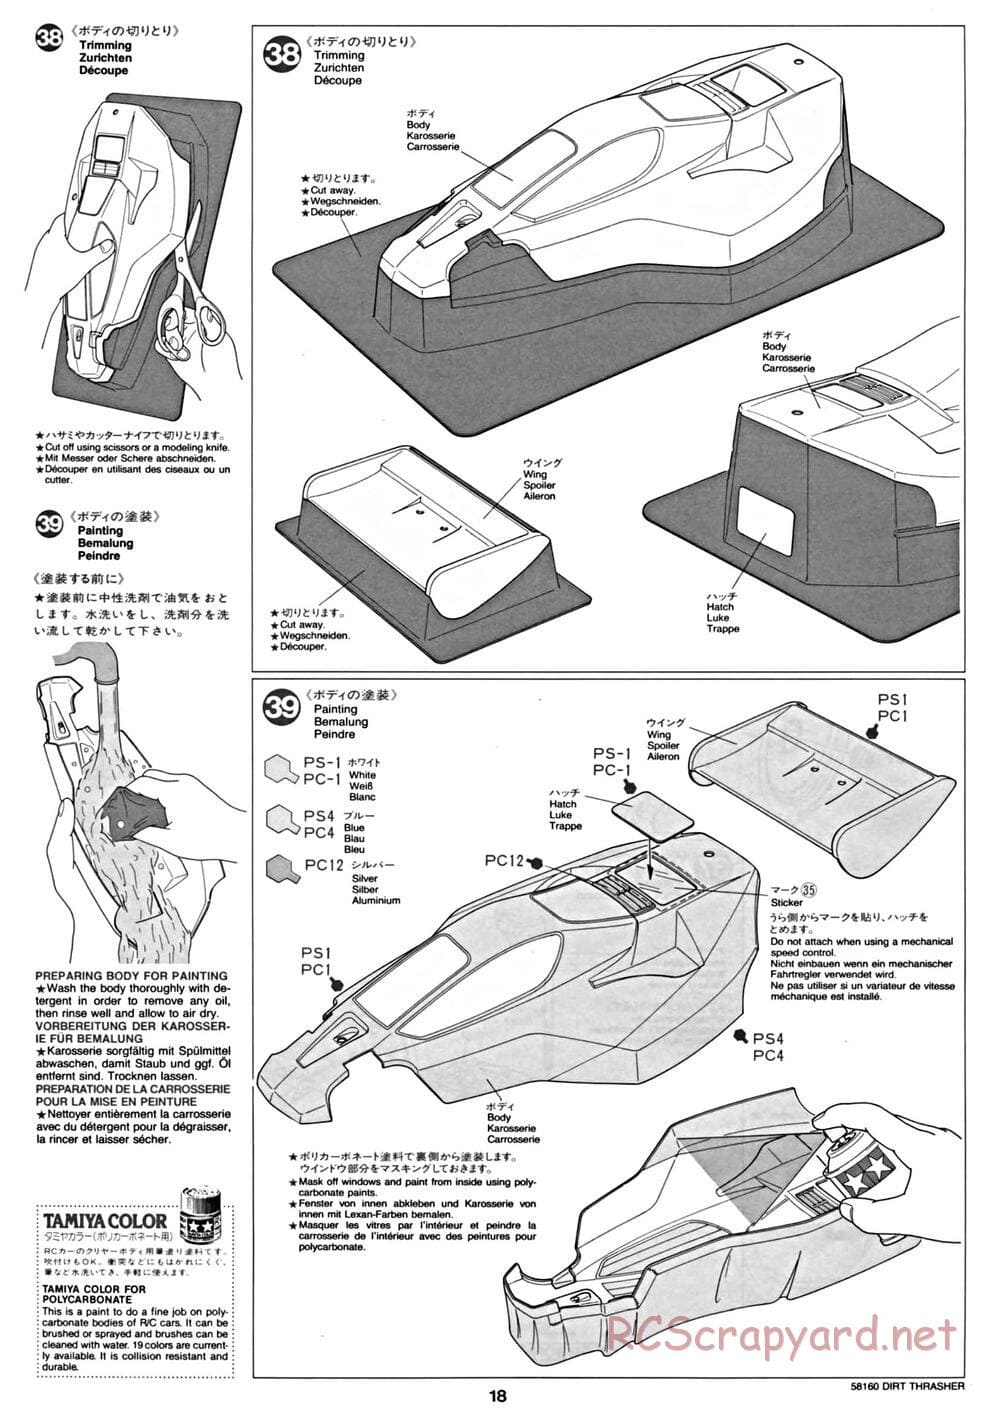 Tamiya - Dirt Thrasher Chassis - Manual - Page 18